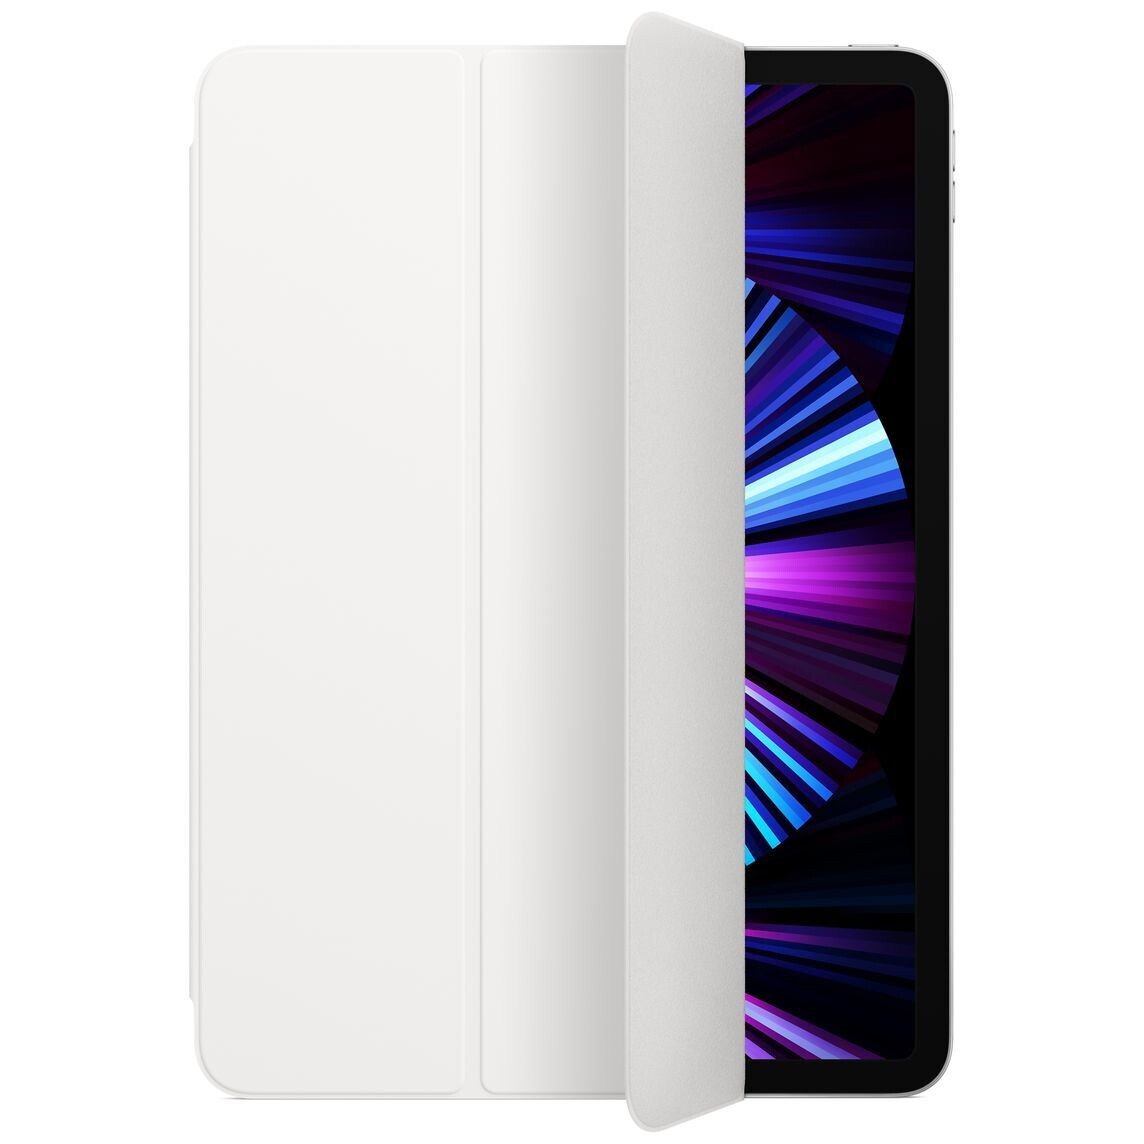 Smart Folio for iPad Pro 11-inch (3rd generation)